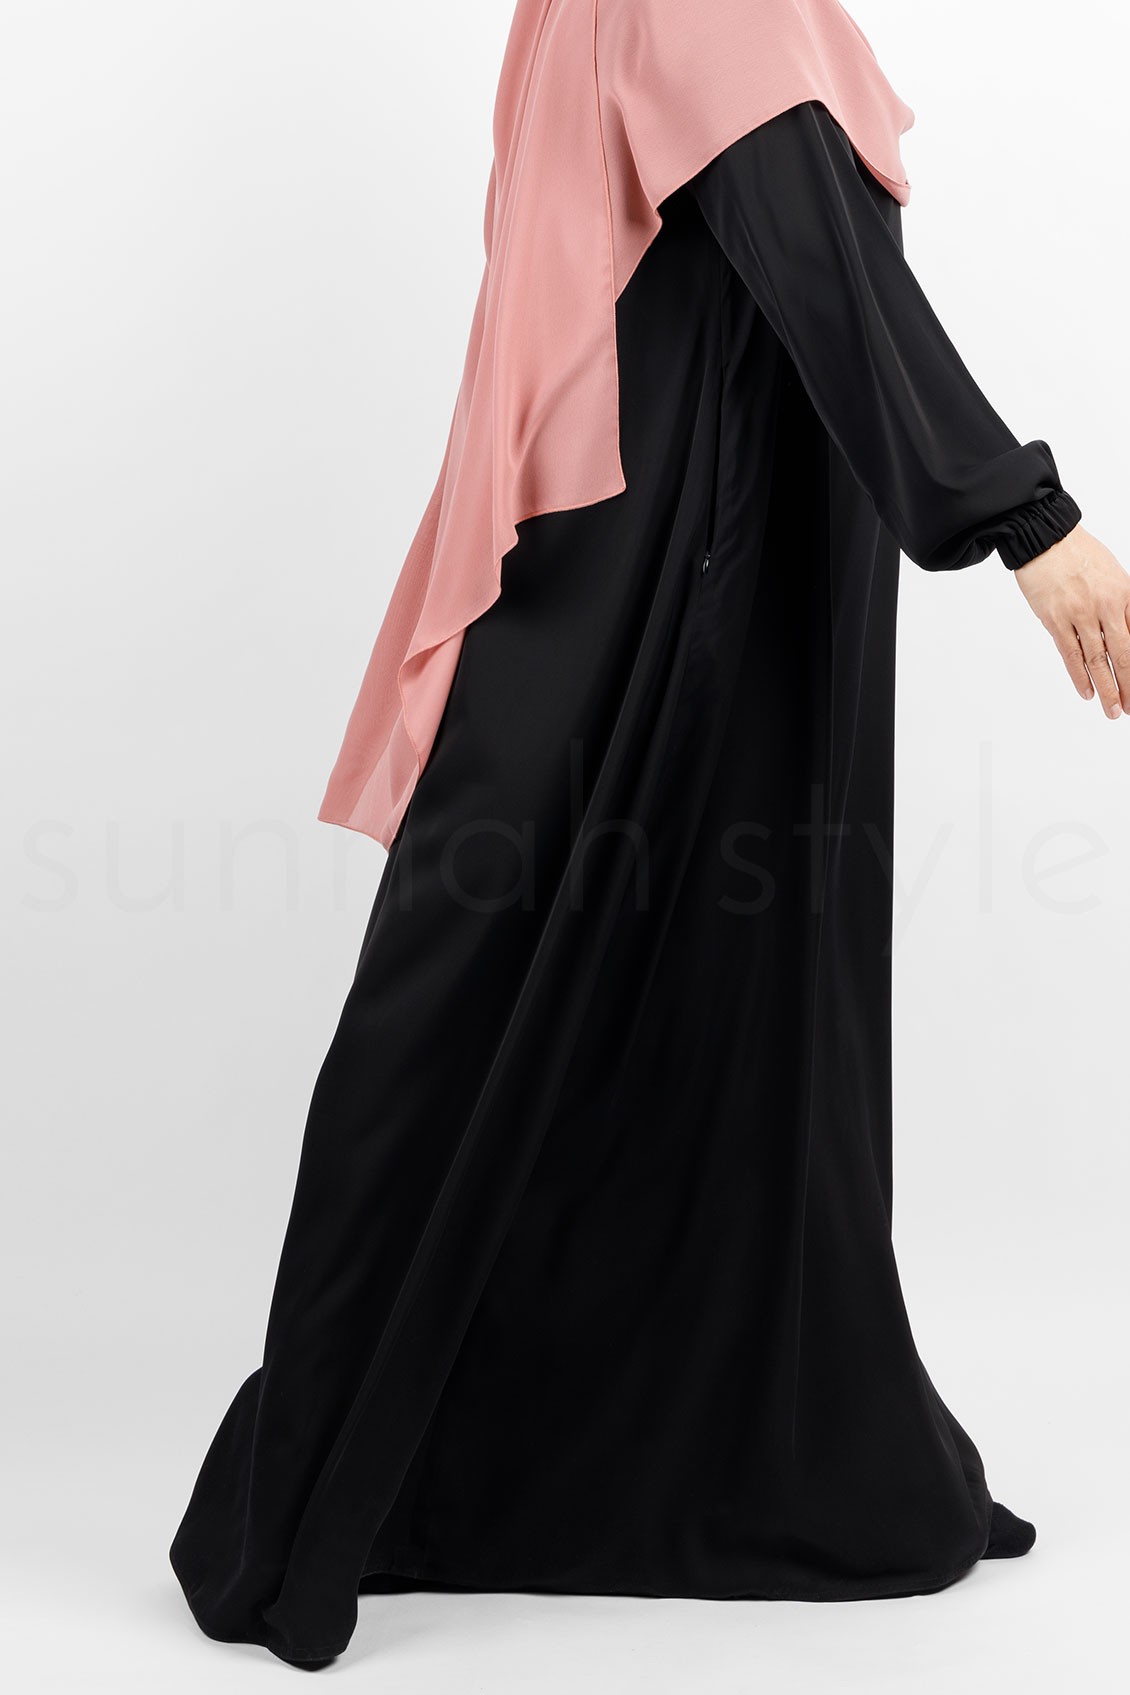 Sunnah Style Versa Stretch Cuff Abaya Black